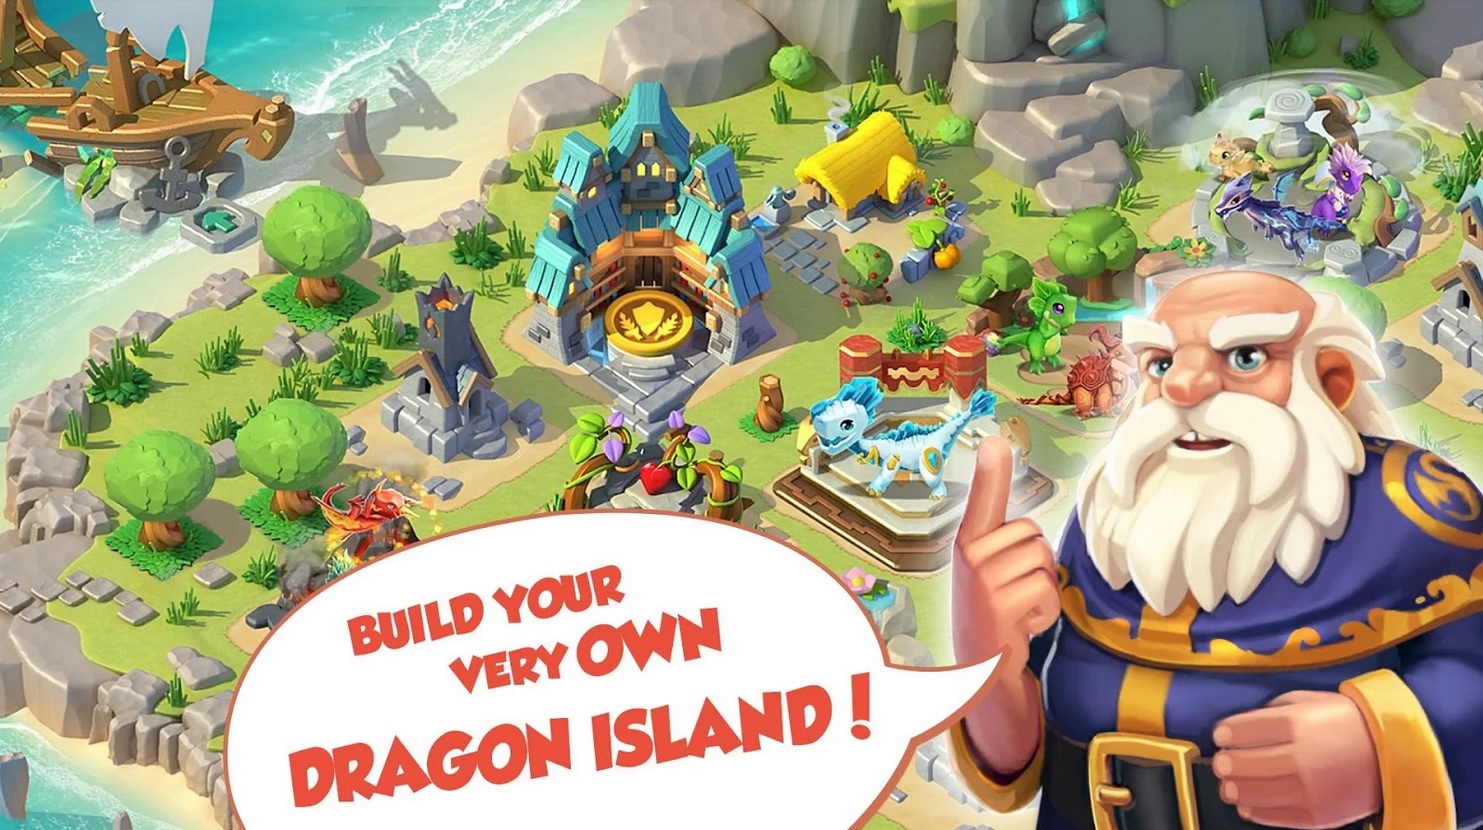 Dragon Mania Legends – Apps no Google Play